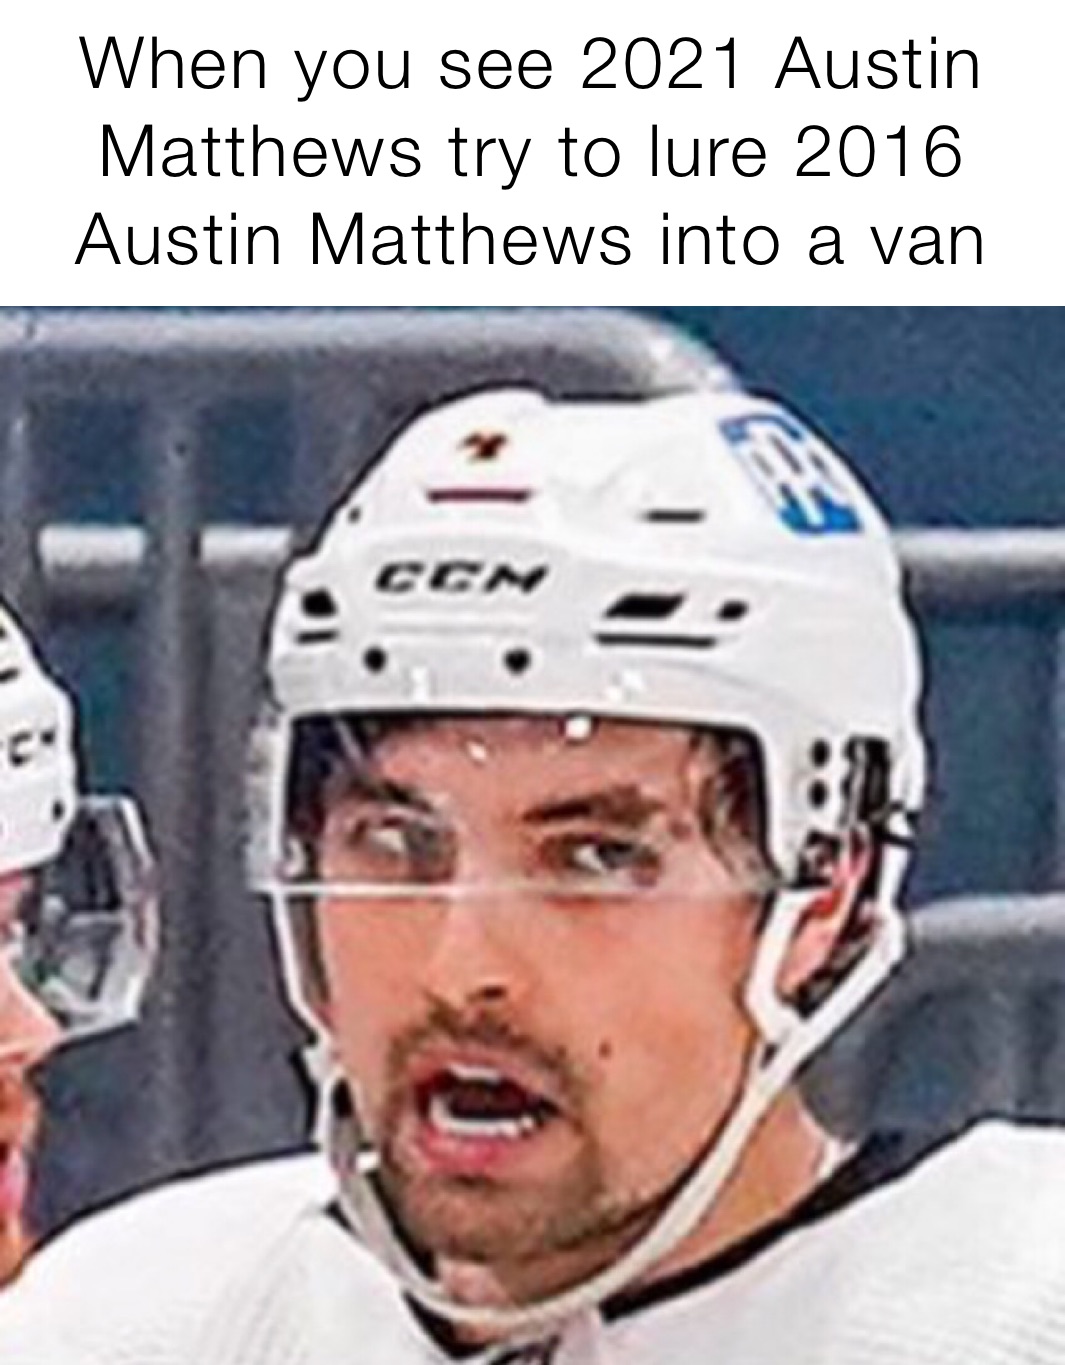 When you see 2021 Austin Matthews try to lure 2016 Austin Matthews into a van